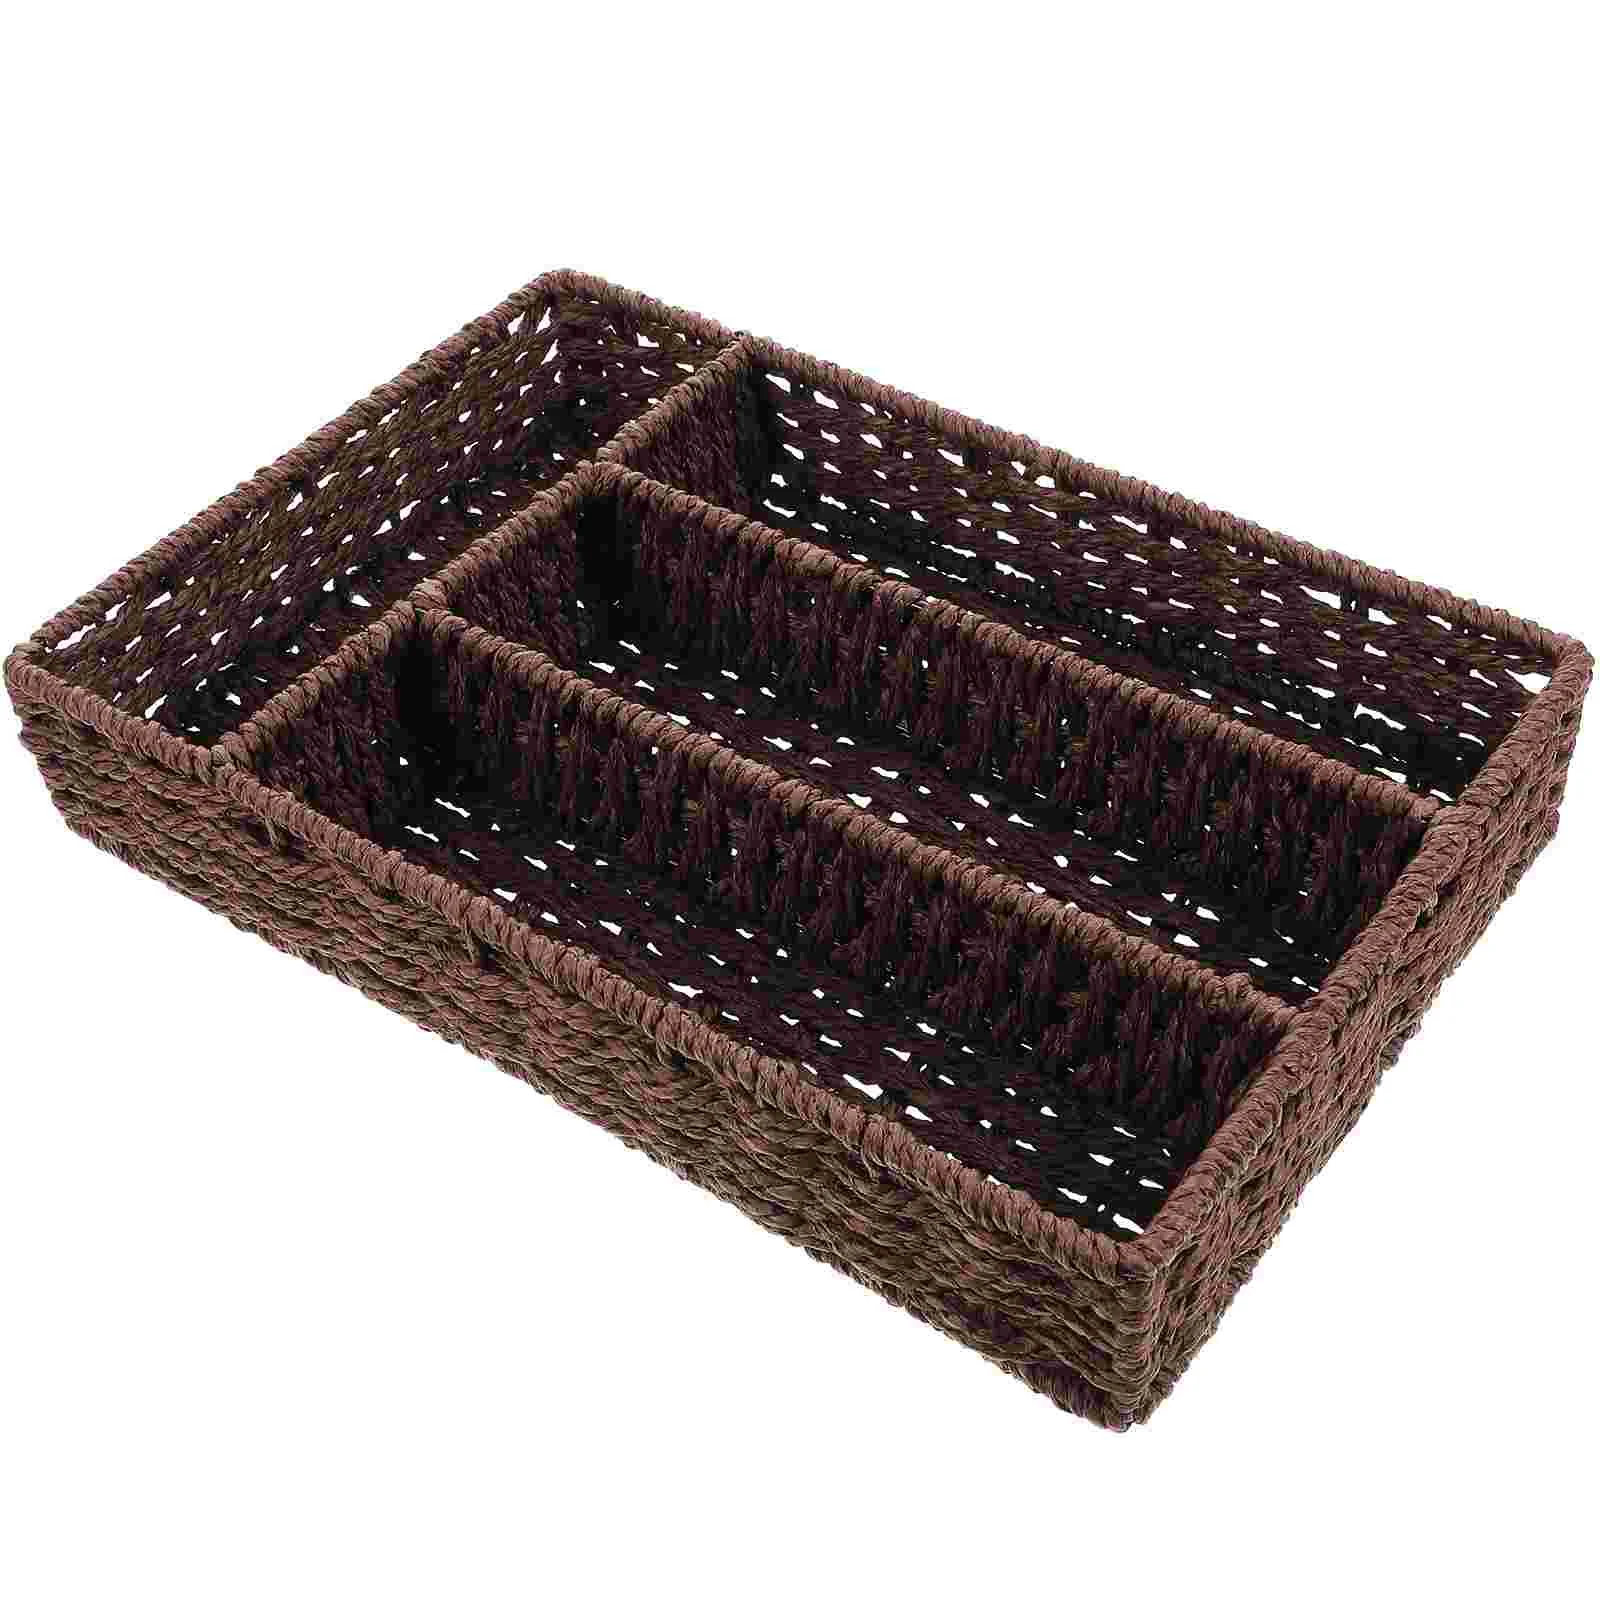 

Basket Storage Organizer Wicker Woven Coffee Holder Rattan Baskets Tea Packet Tray Station Cutlery Box Sugar Condiment Seagrass